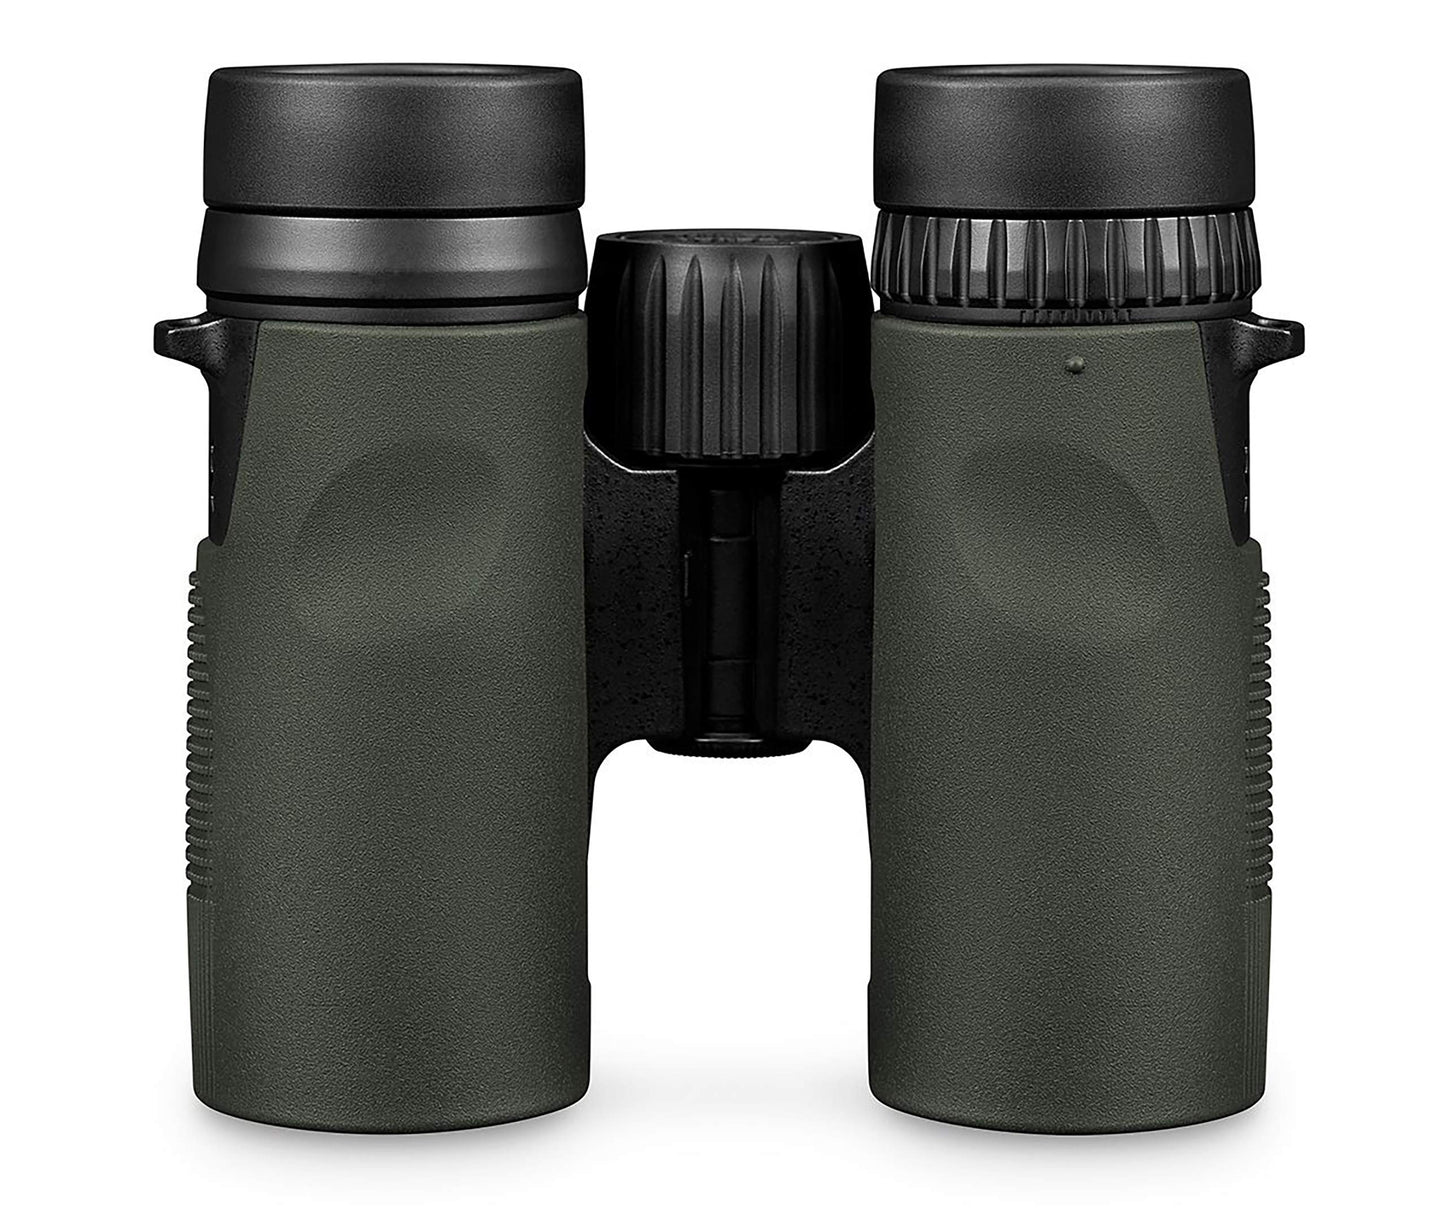 Vortex Optics Diamondback HD 10x32 Binoculars - DB-213